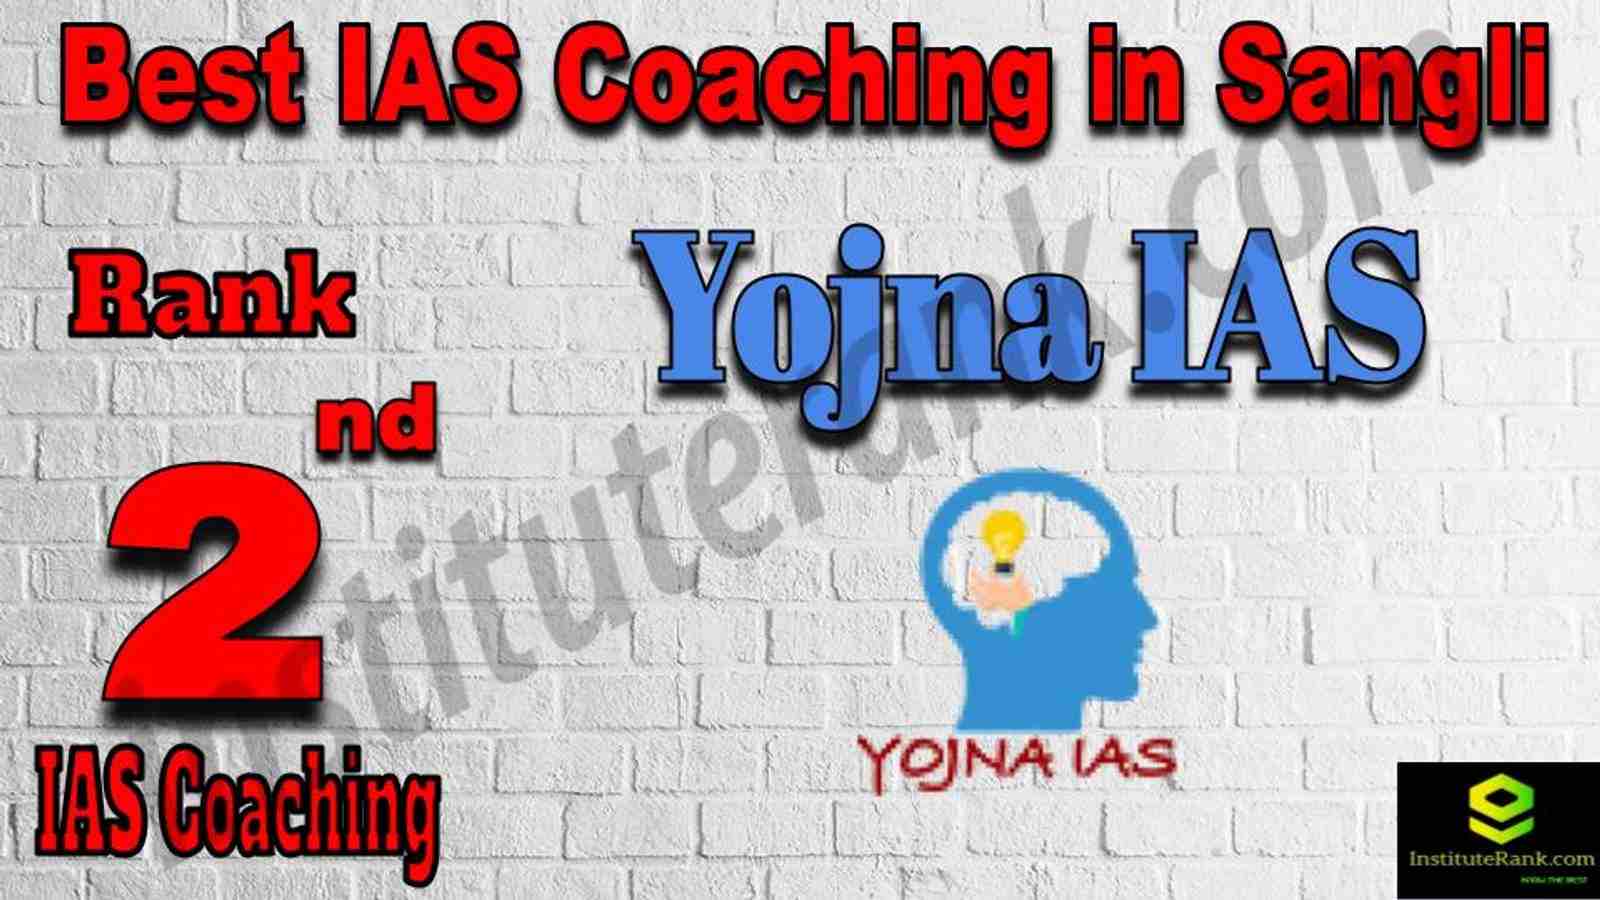 2nd Best IAS Coaching in Sangli